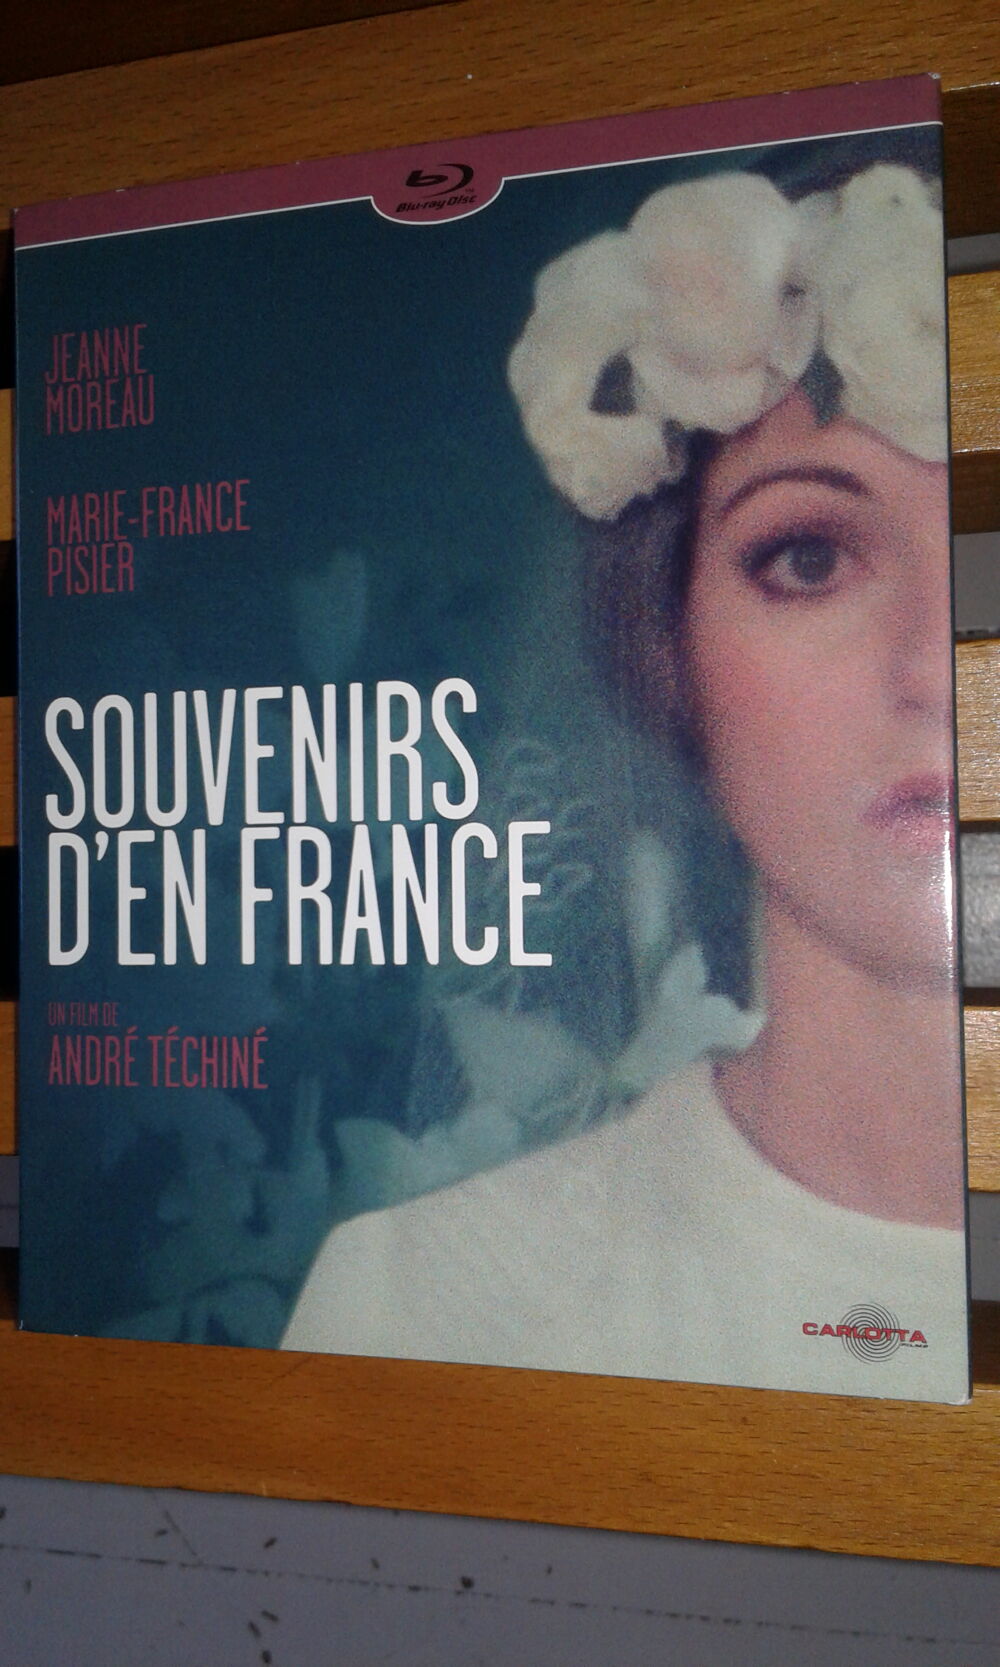 [Blu-Ray] Souvenirs d'en France (Andr&eacute; T&eacute;chin&eacute;) DVD et blu-ray